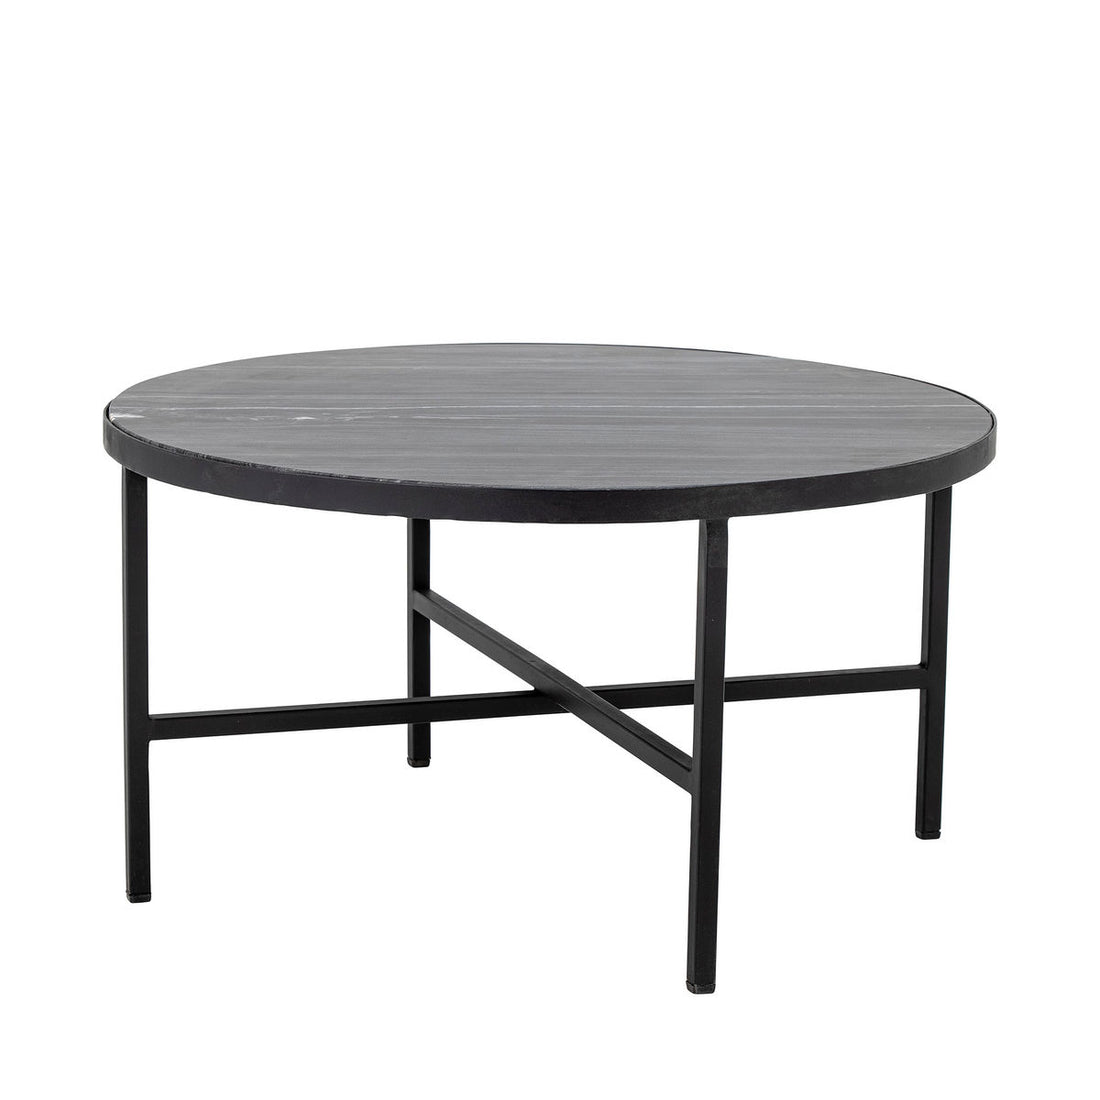 Bloomingville Estelle coffee table, gray, marble